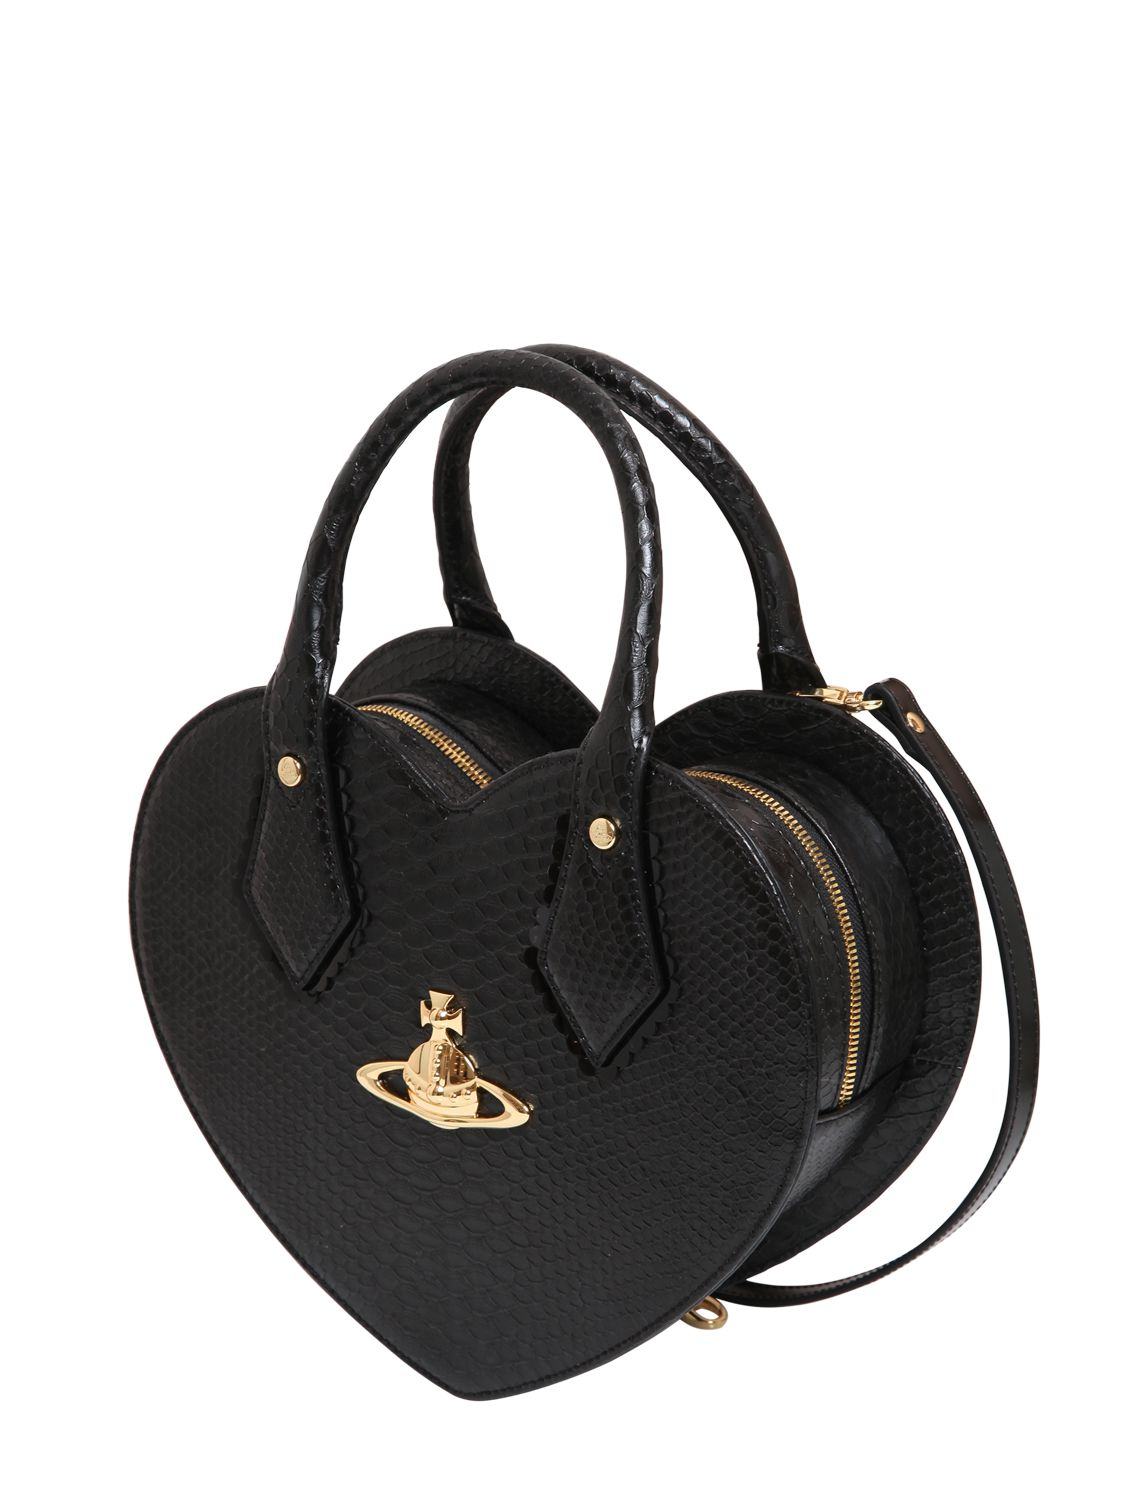 Vivienne Westwood Heart Snake Embossed Faux Leather Bag in Black - Lyst